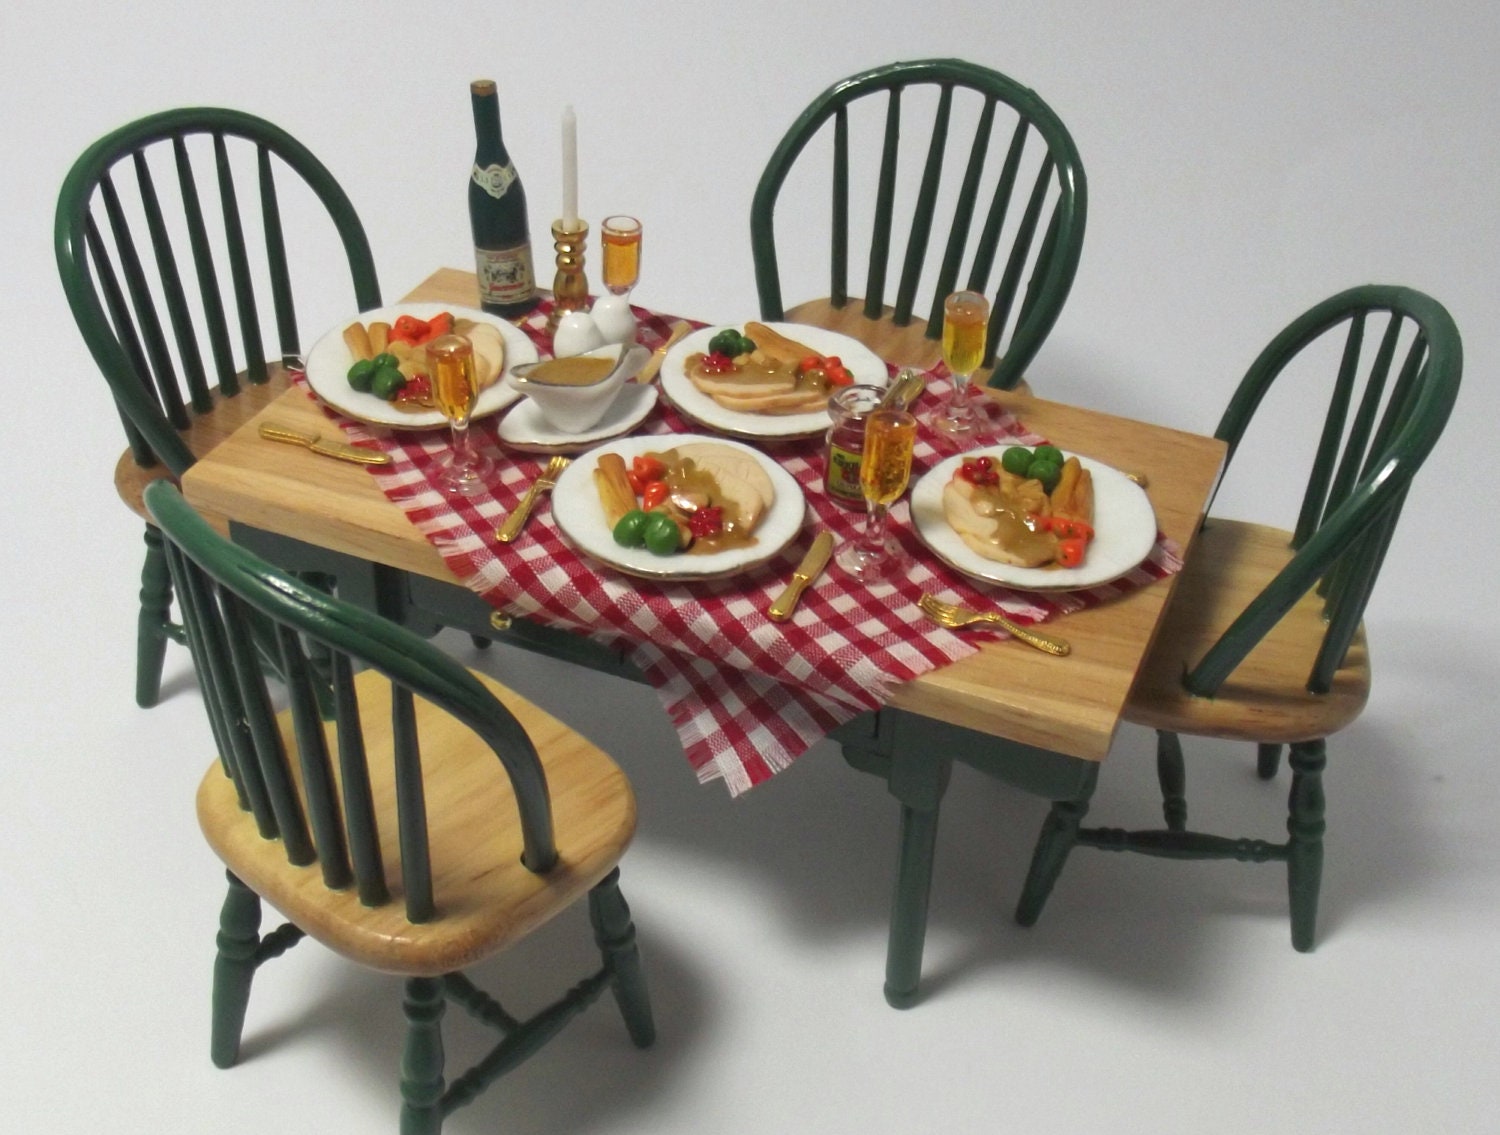 Dolls House 1:12 OOAK Miniature Country Kitchen - Handmade Turkey Dinner Table Set